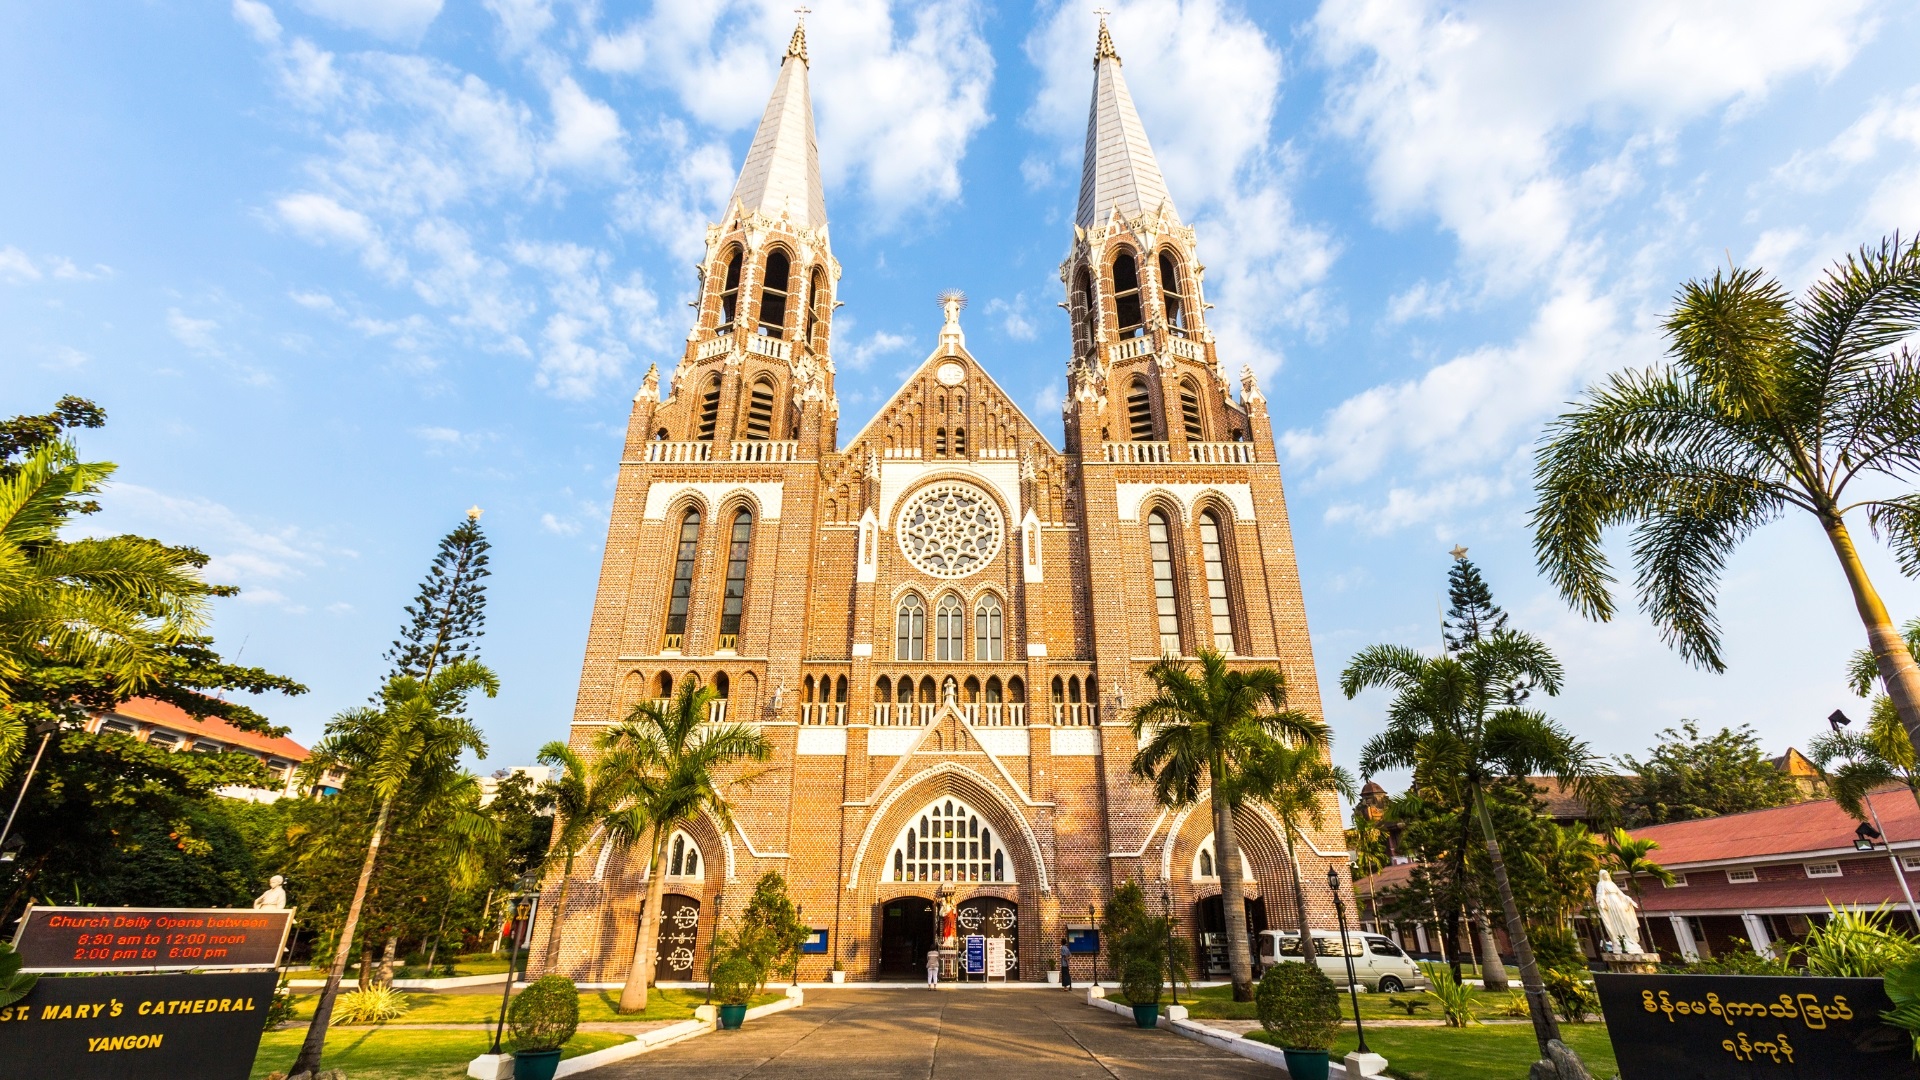 Saint Mary's Cathedral Yangon